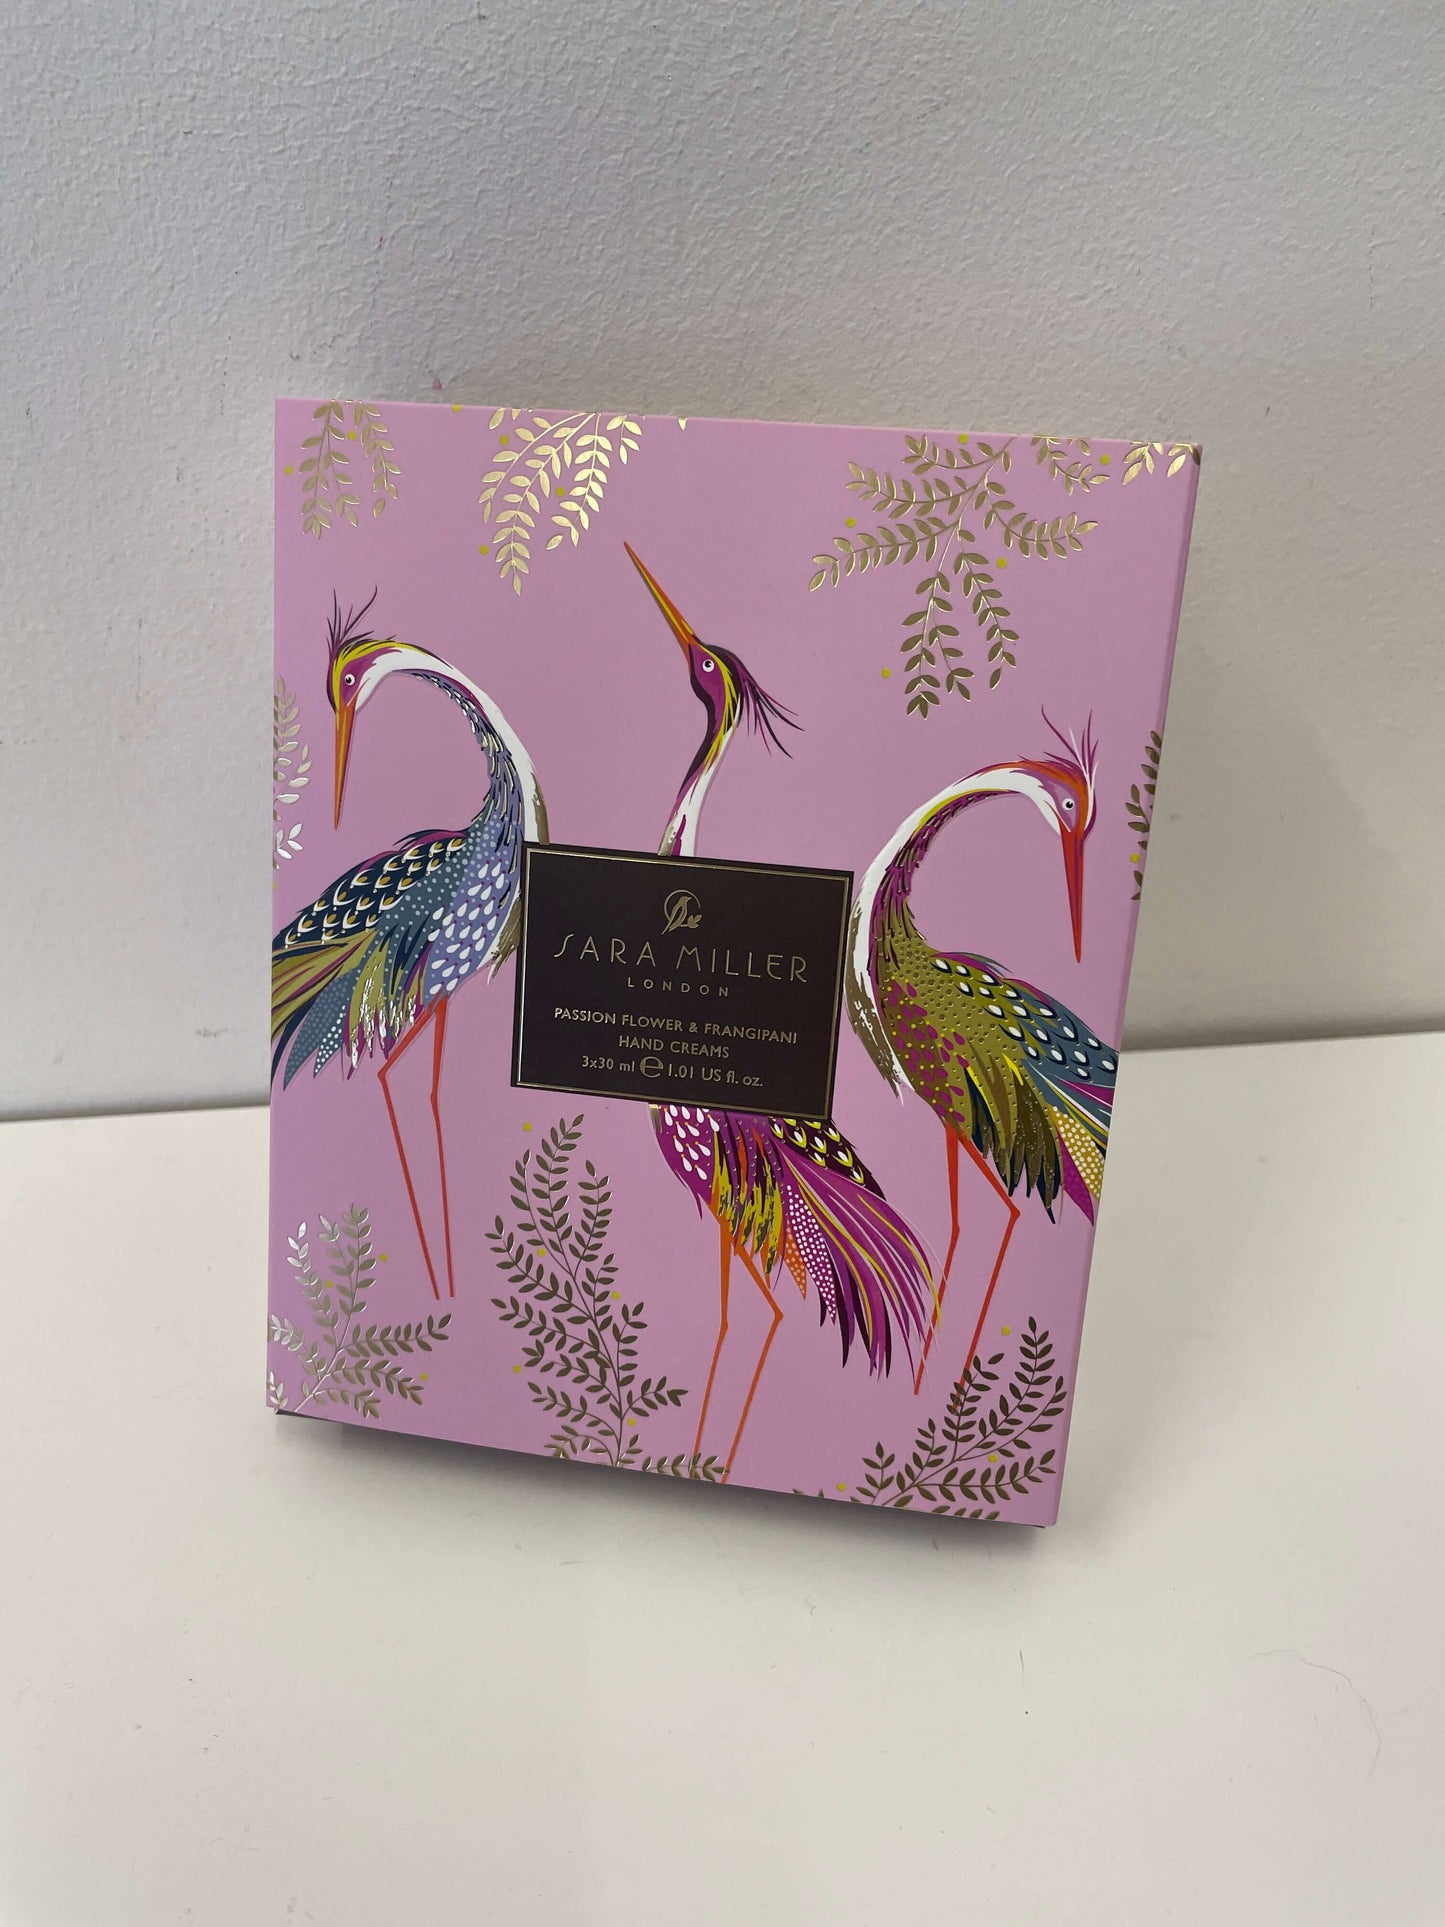 Sara Miller London Passion Flower & Frangipani Hand Cream Trilogy